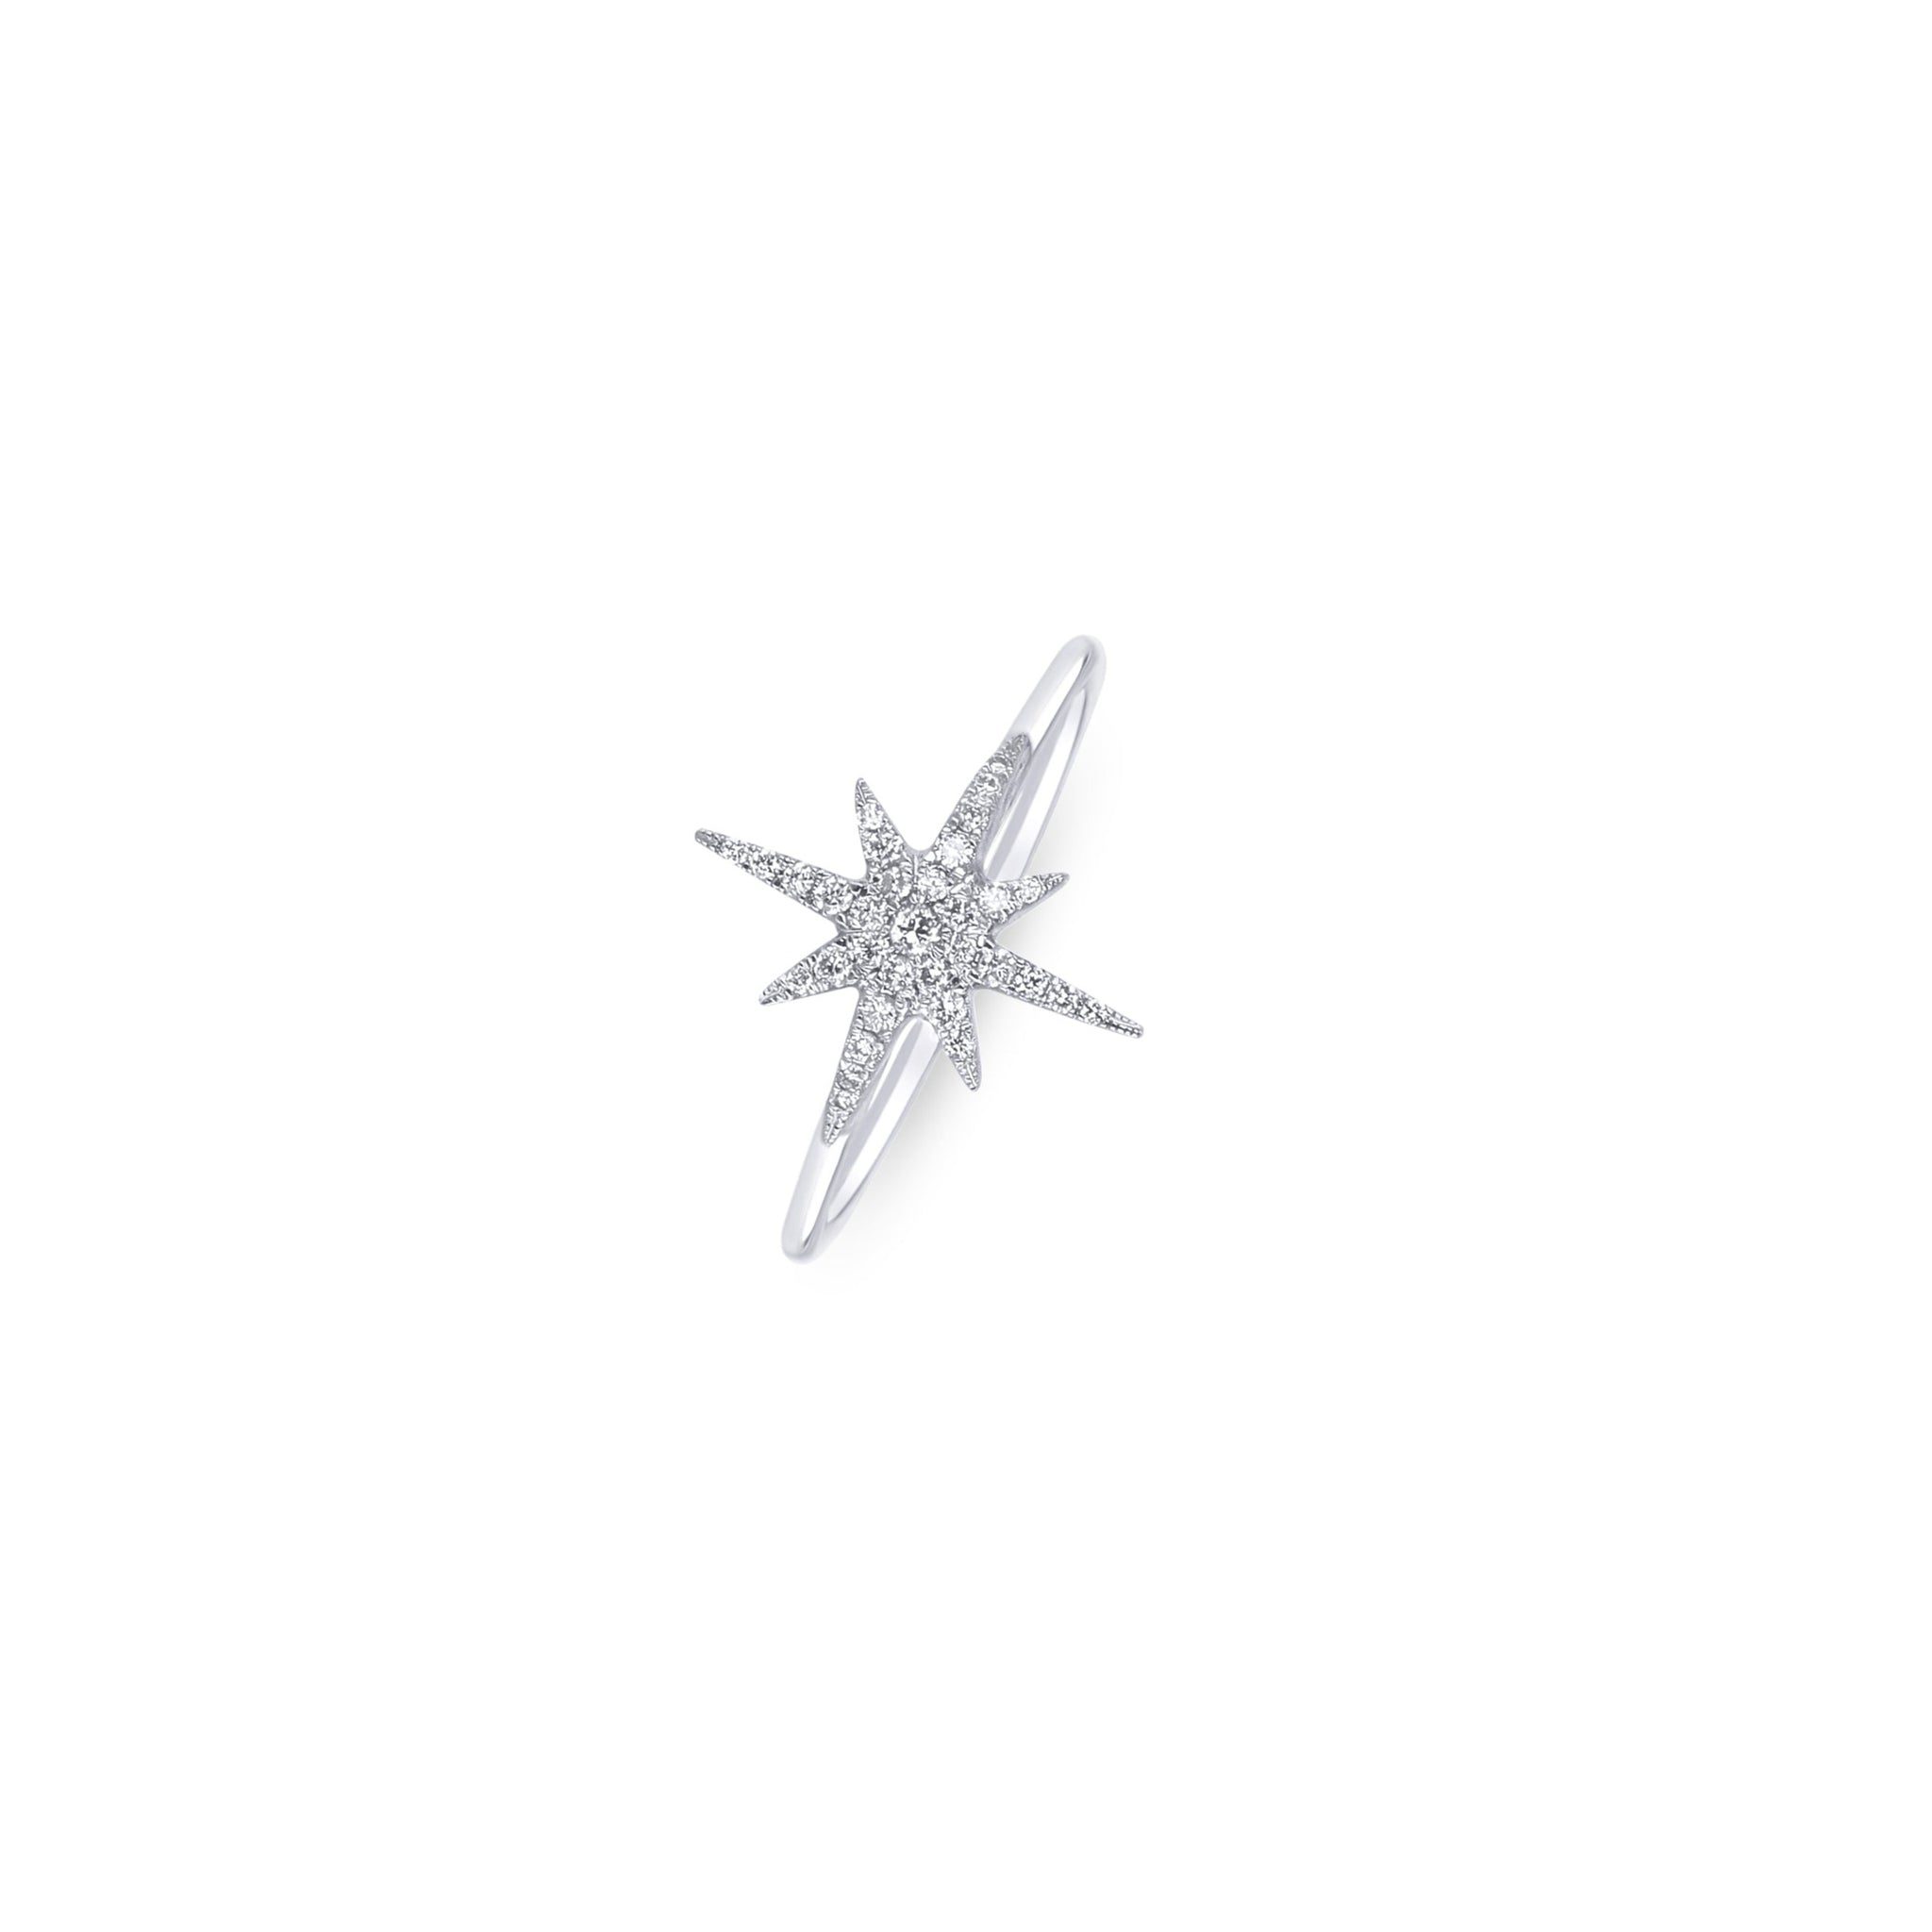 Starburst Ring - White diamonds